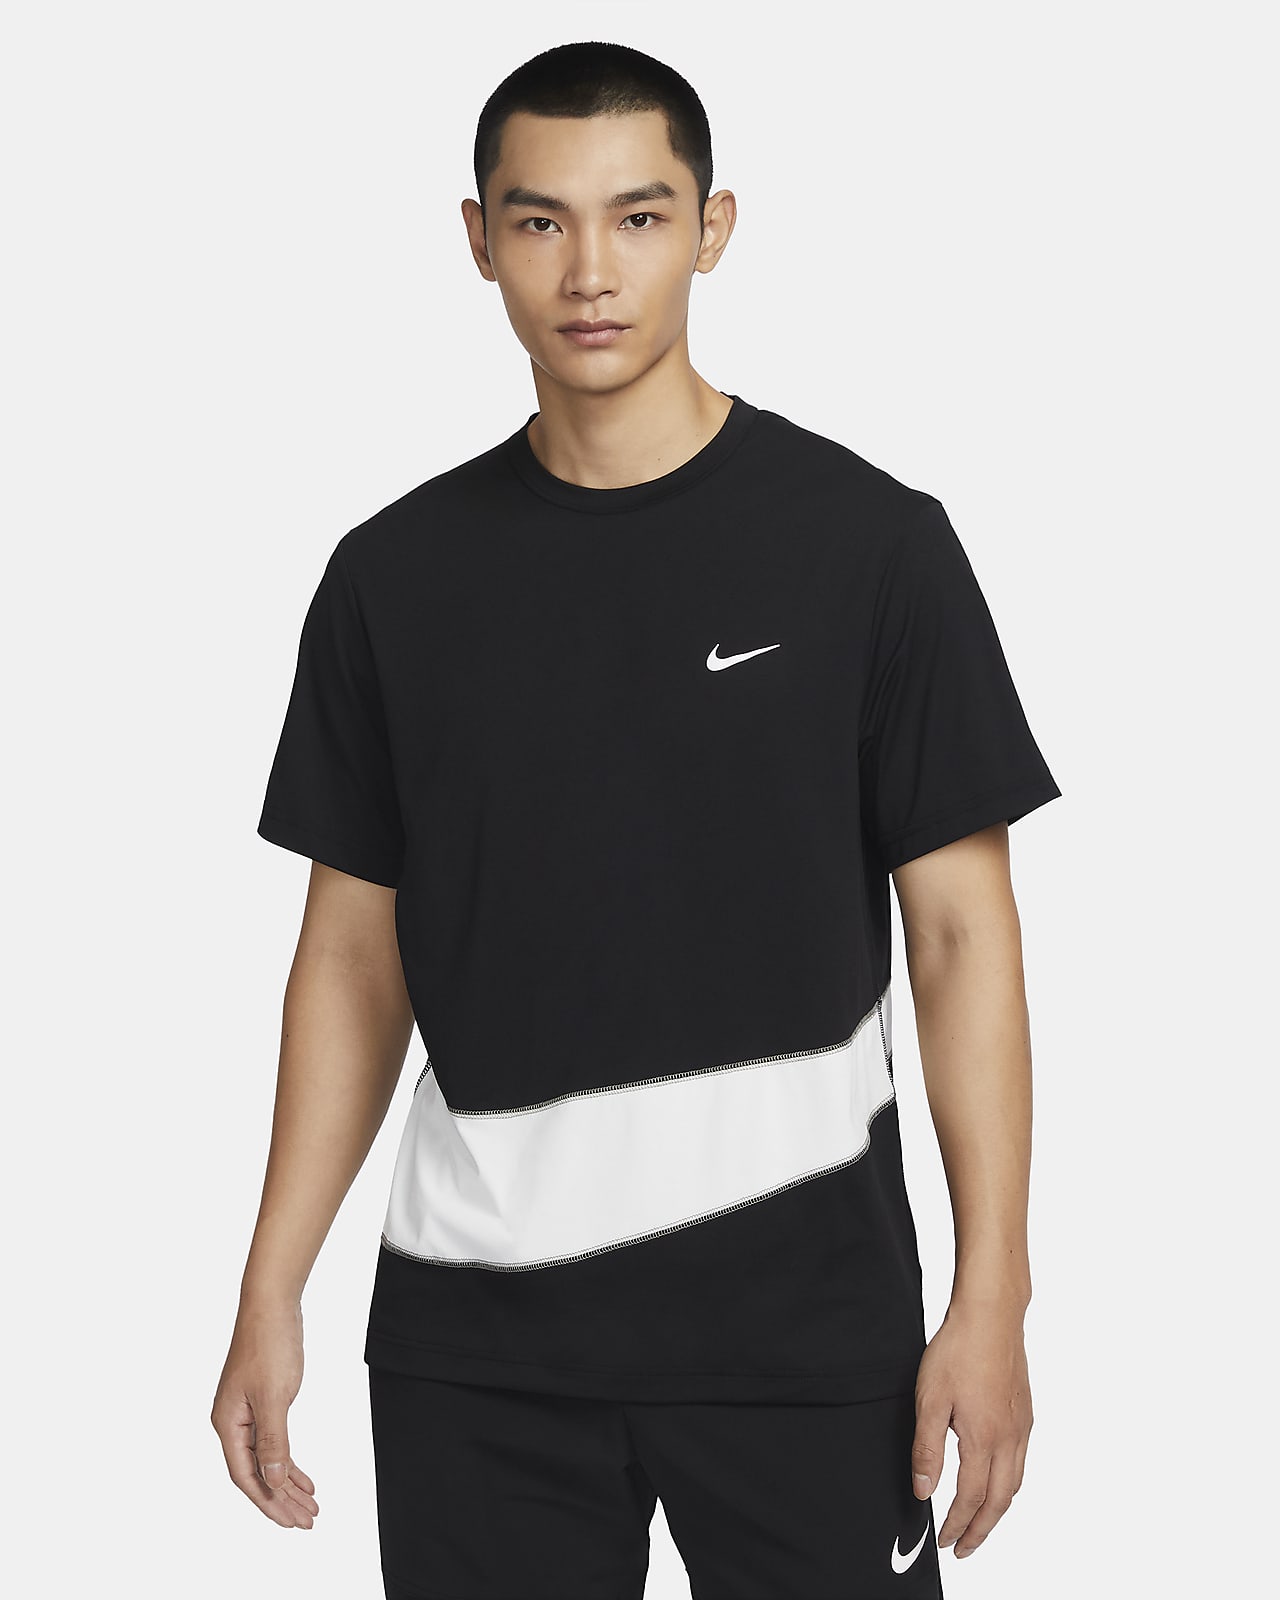 Nike Yoga Dri-FIT graphic logo t-shirt in black